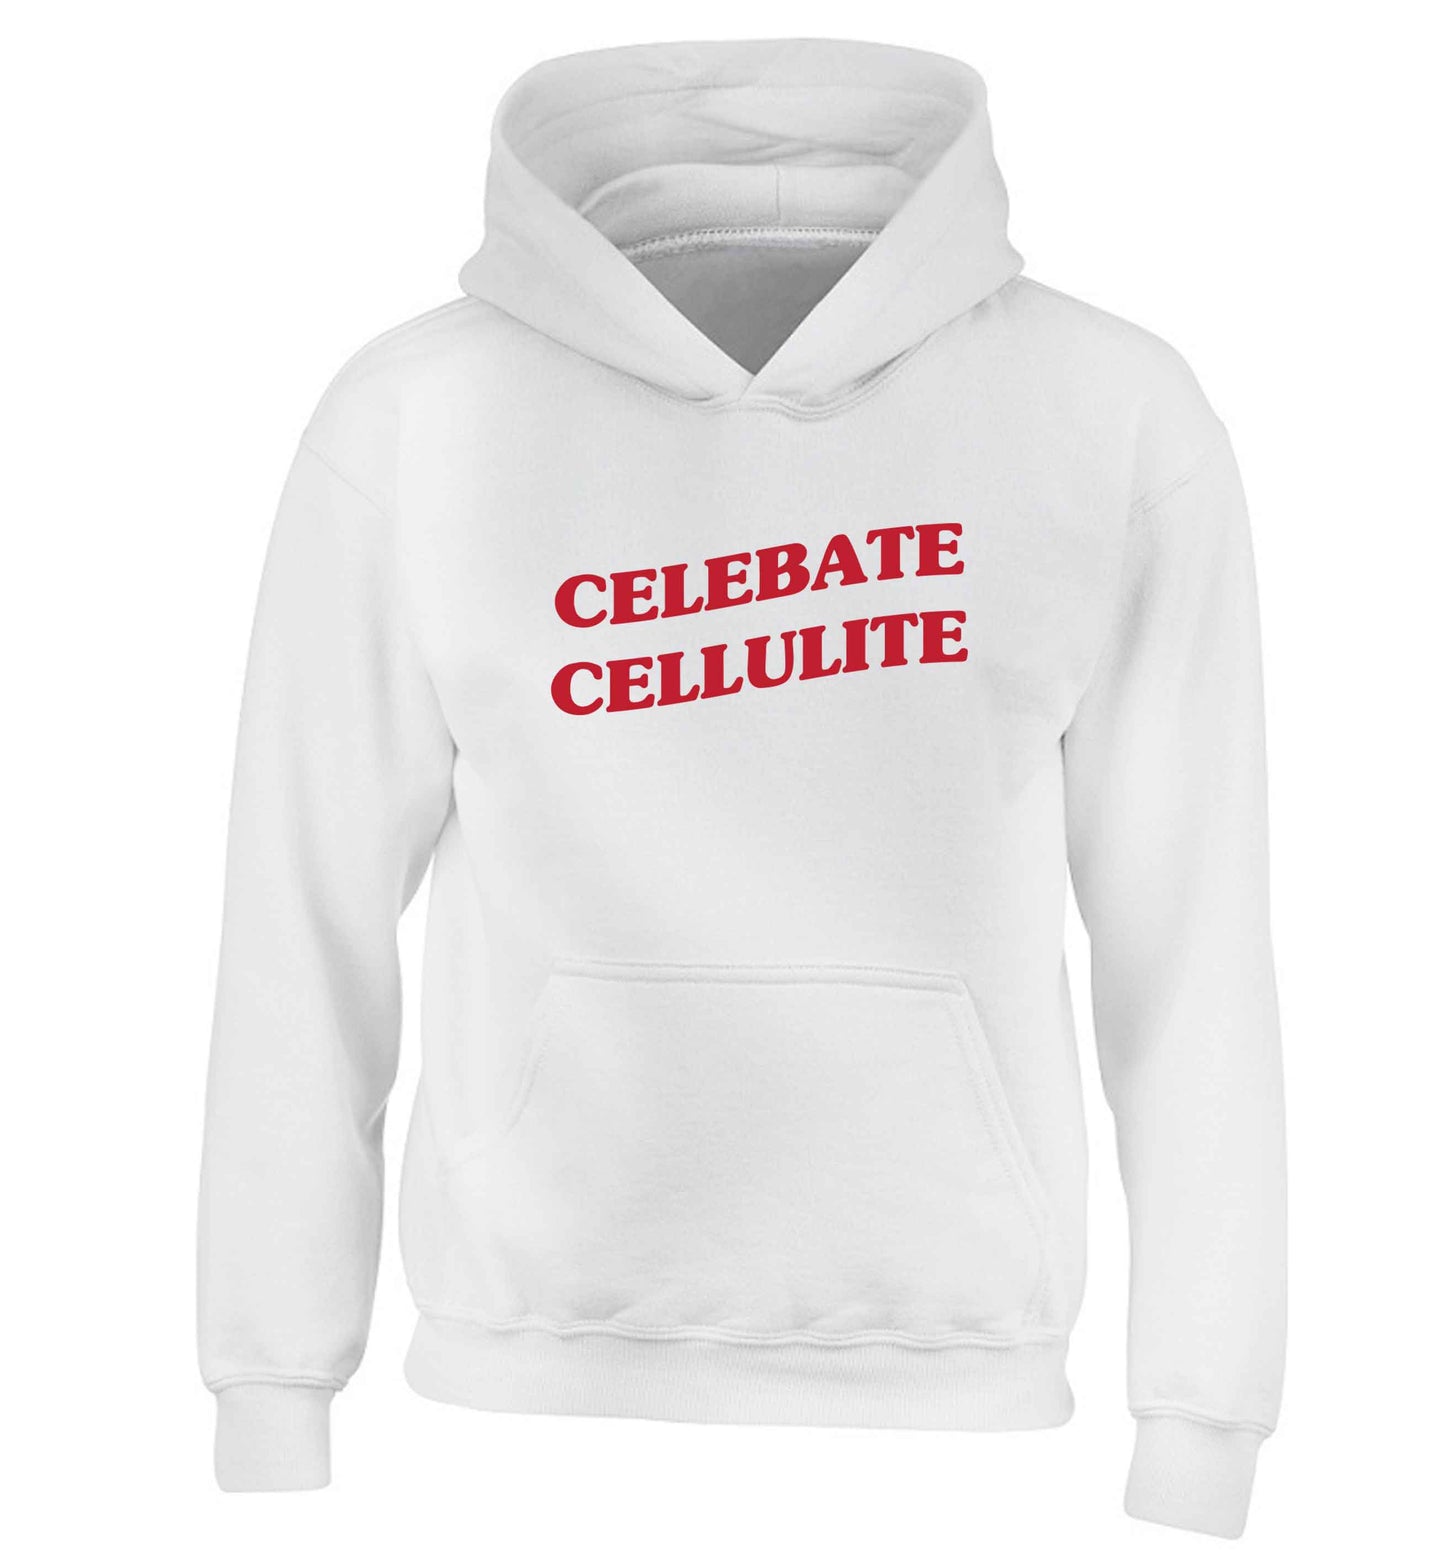 Celebrate cellulite children's white hoodie 12-13 Years